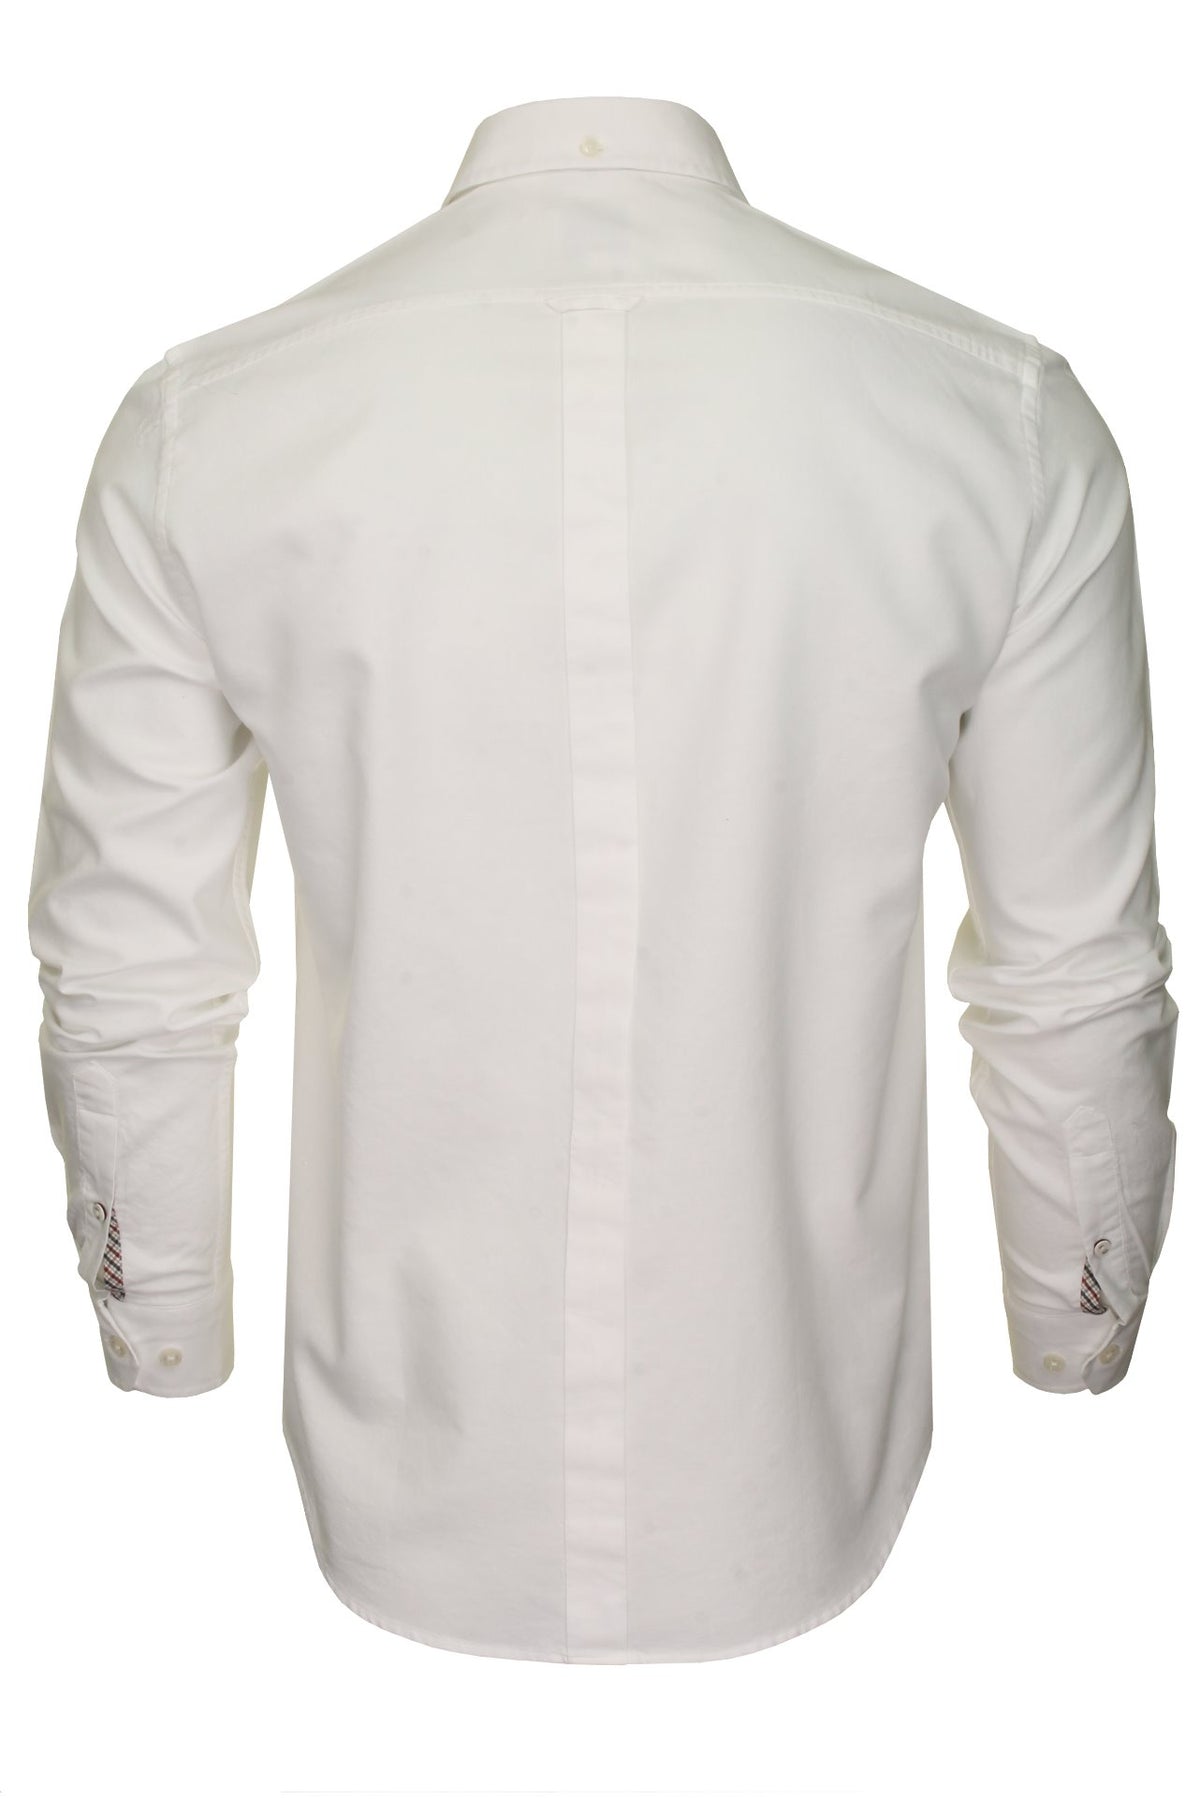 Ben Sherman Mens Oxford Shirt Long Sleeved (Embroidered Logo), 03, 48578, White (Embroidered Pocket Logo)